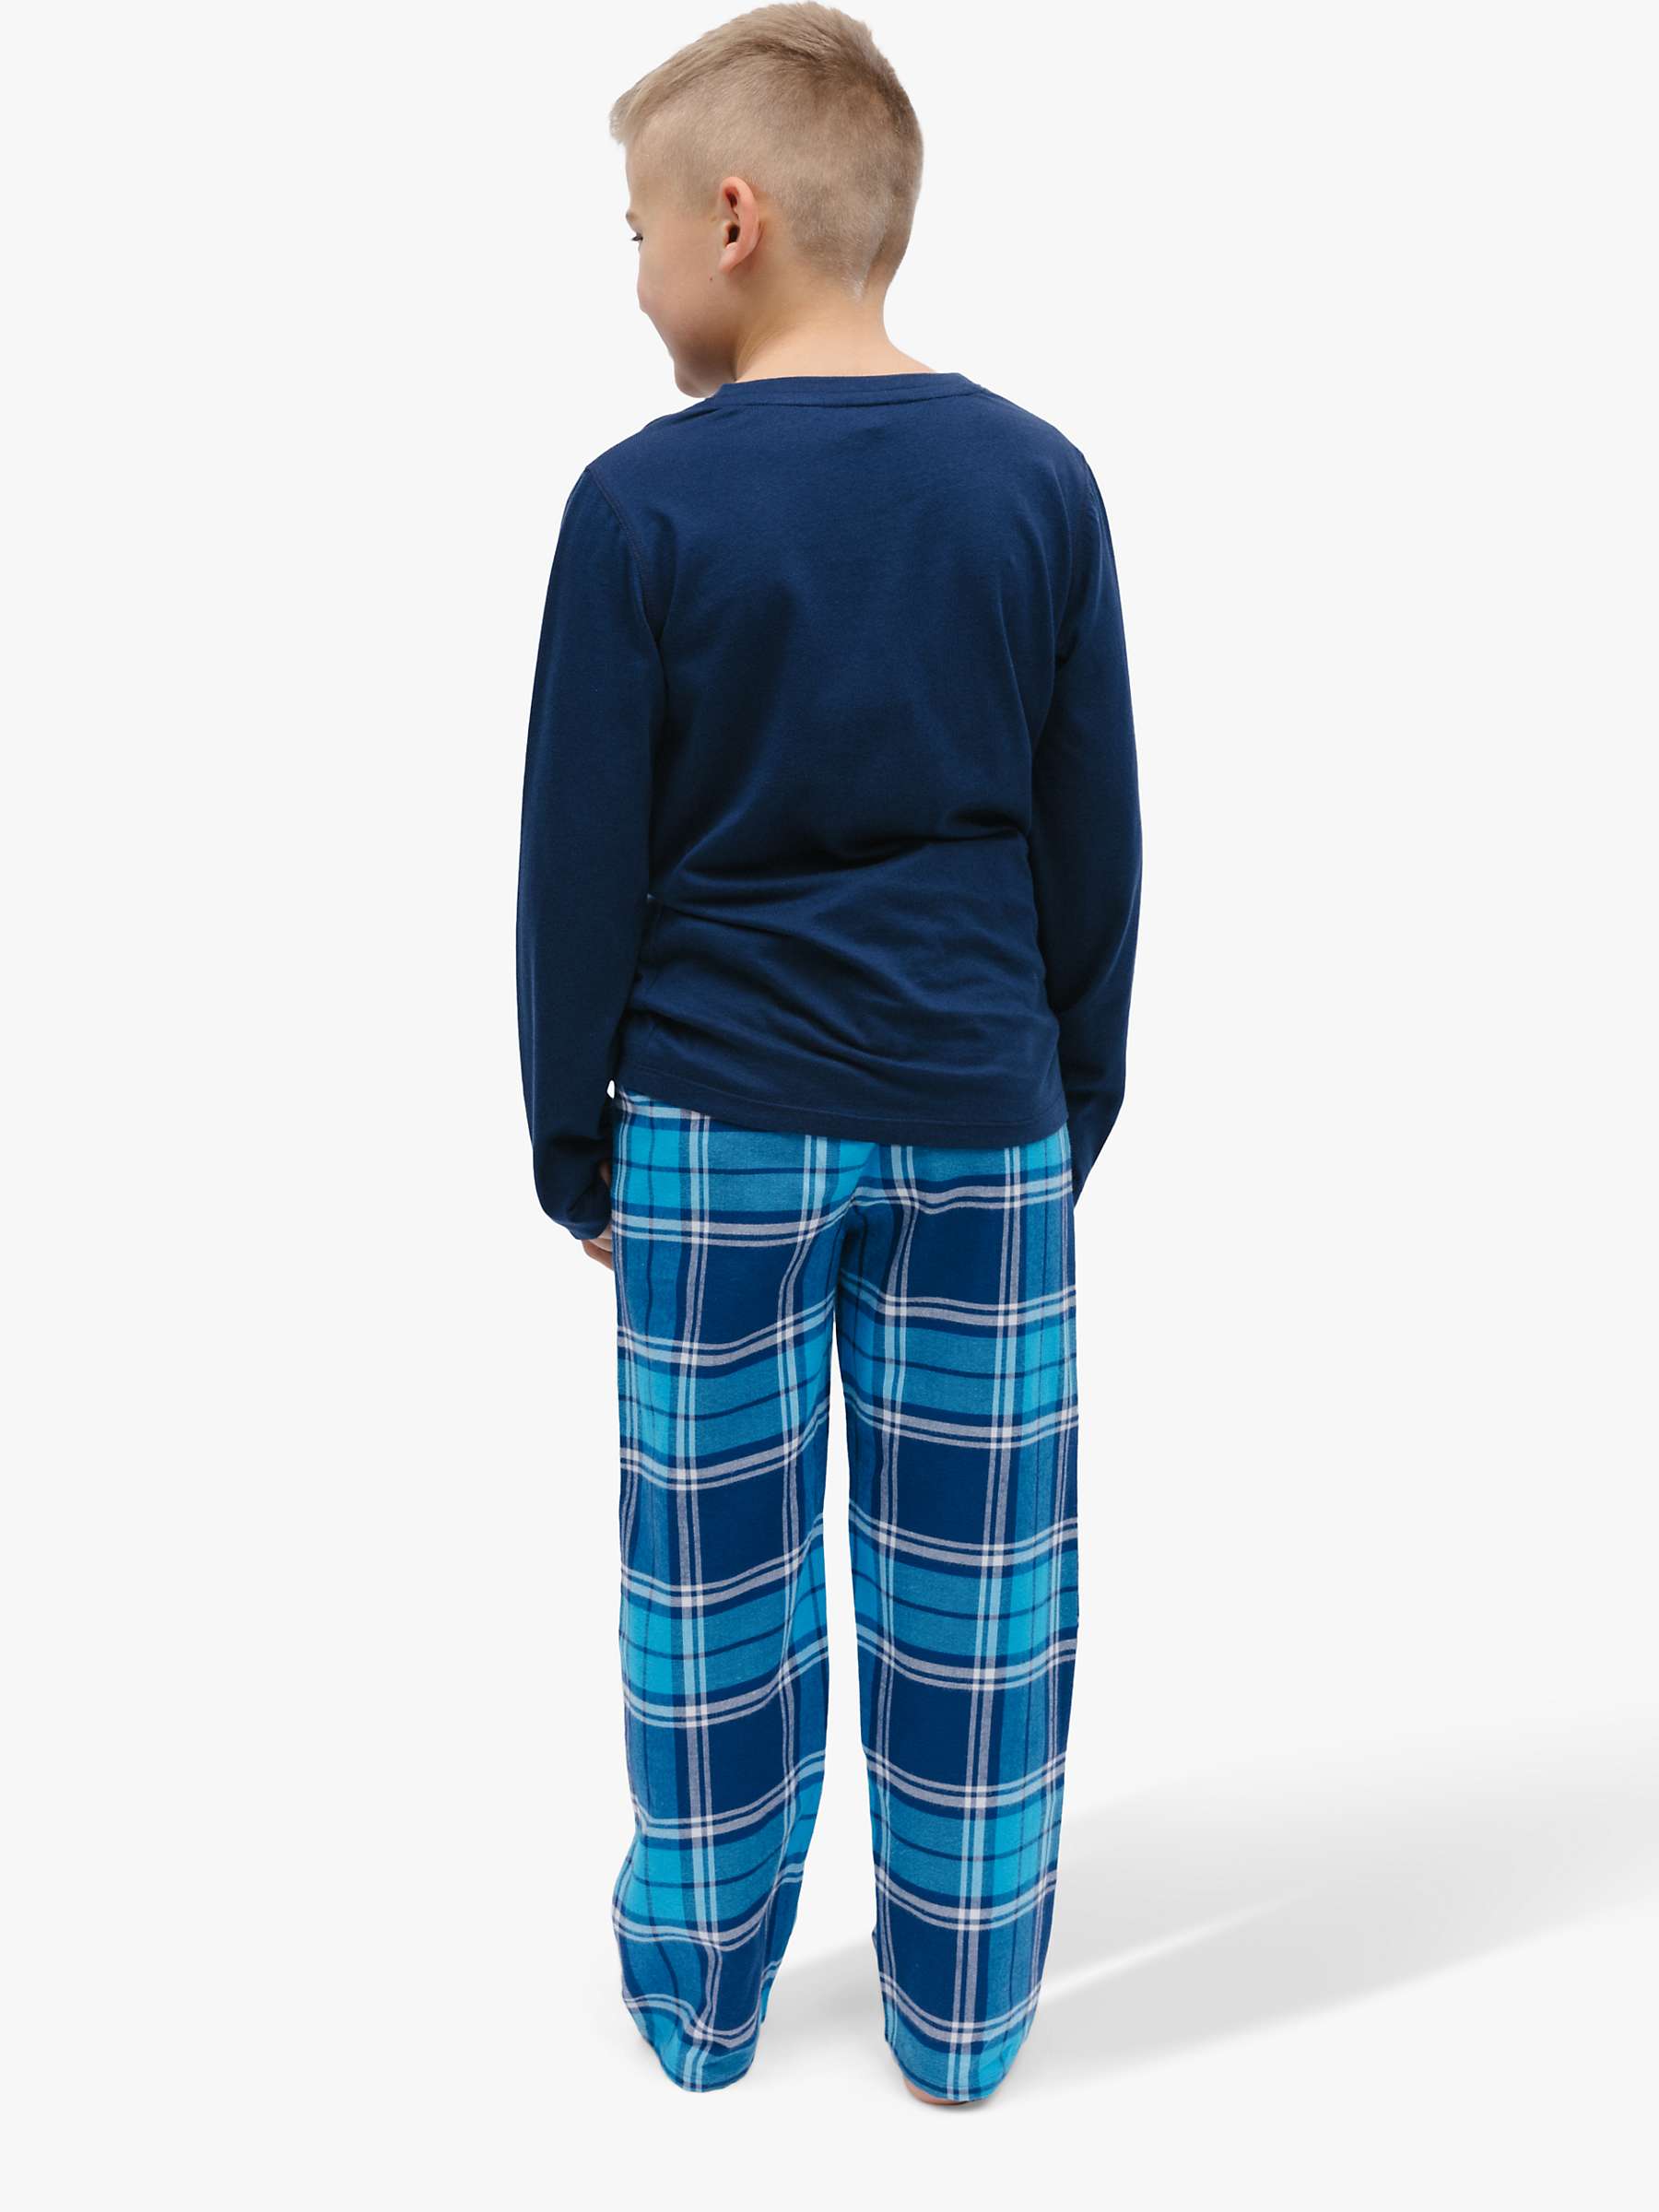 Buy Minijammies Kids' Felix Check Unisex Pyjamas, Dark Blue Online at johnlewis.com